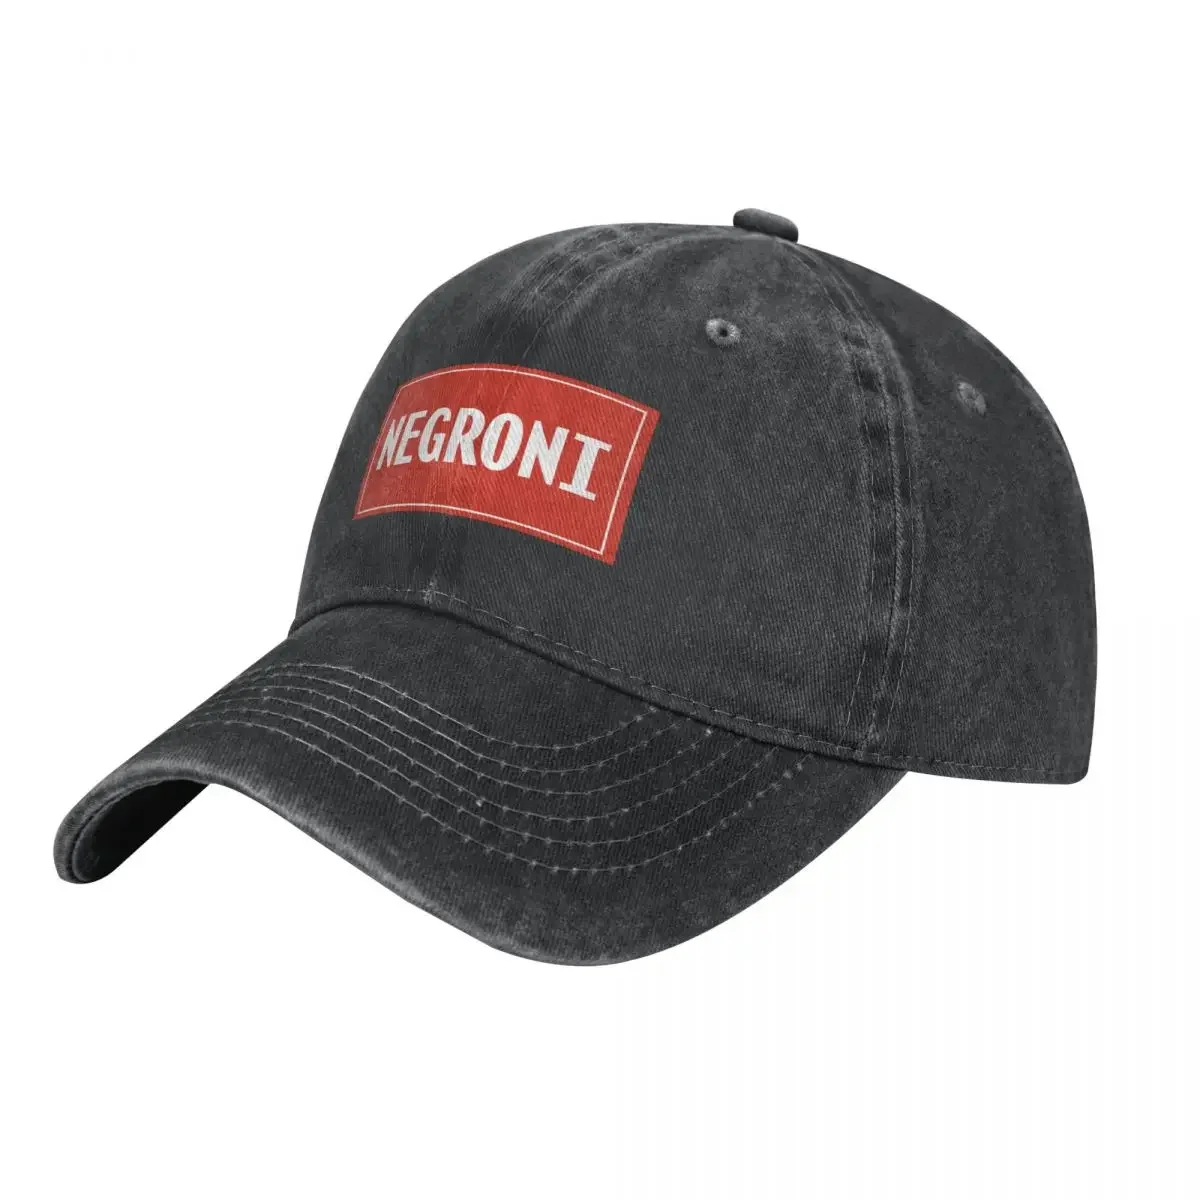 

Negroni Vintage Rectangle Cowboy Hat Hat Baseball Cap Hat Man For The Sun Icon Snapback Cap Female Men's